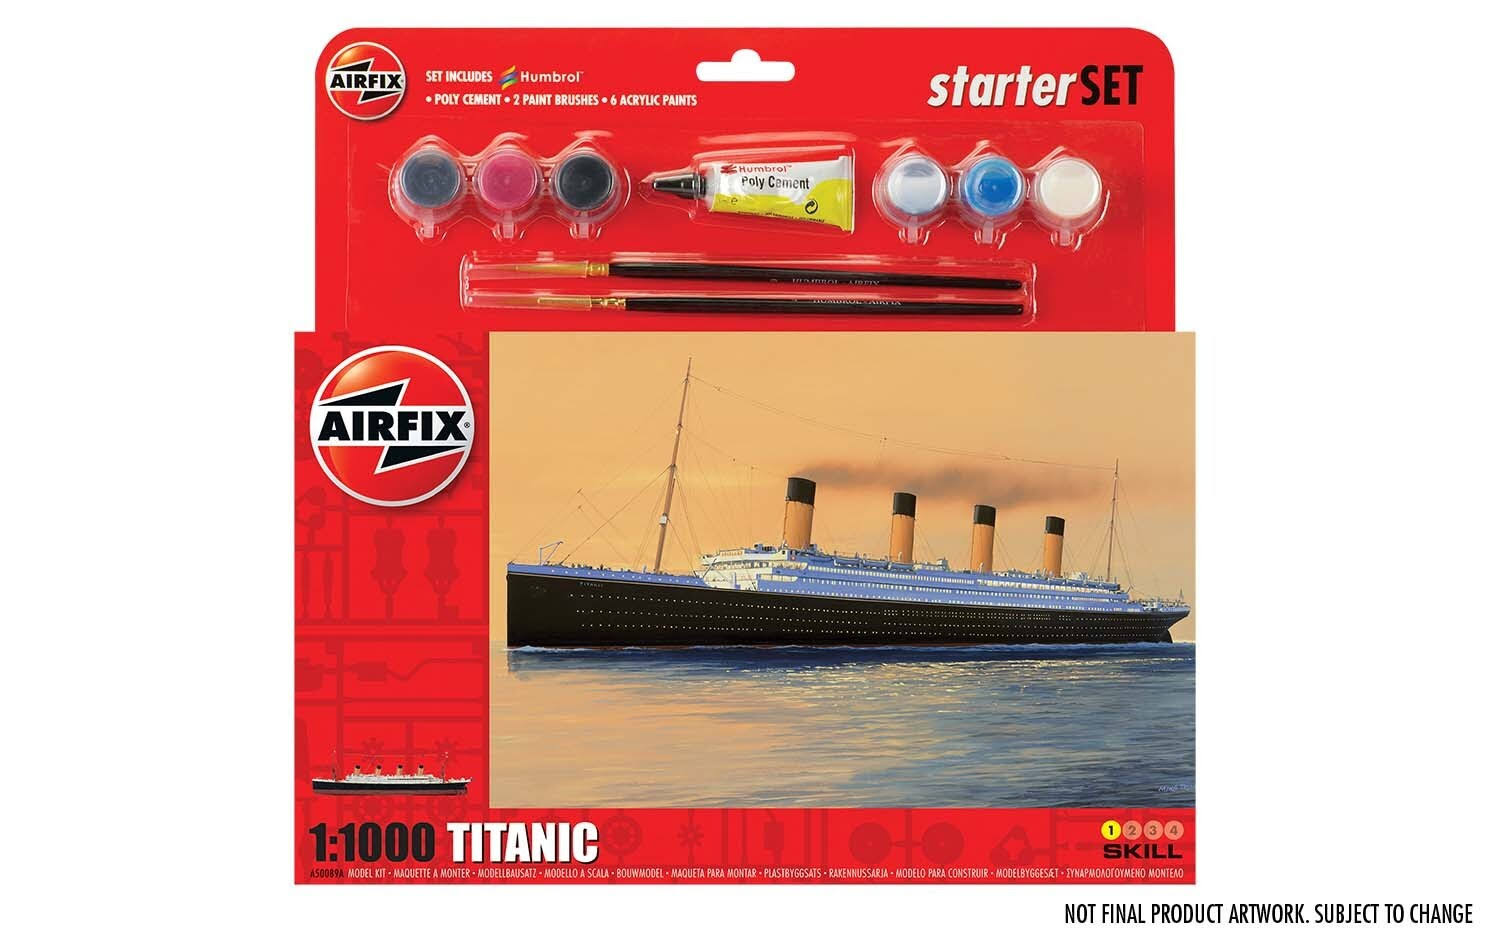 R.M.S. Titanic Gift Set, Airfix A55314 (2019)